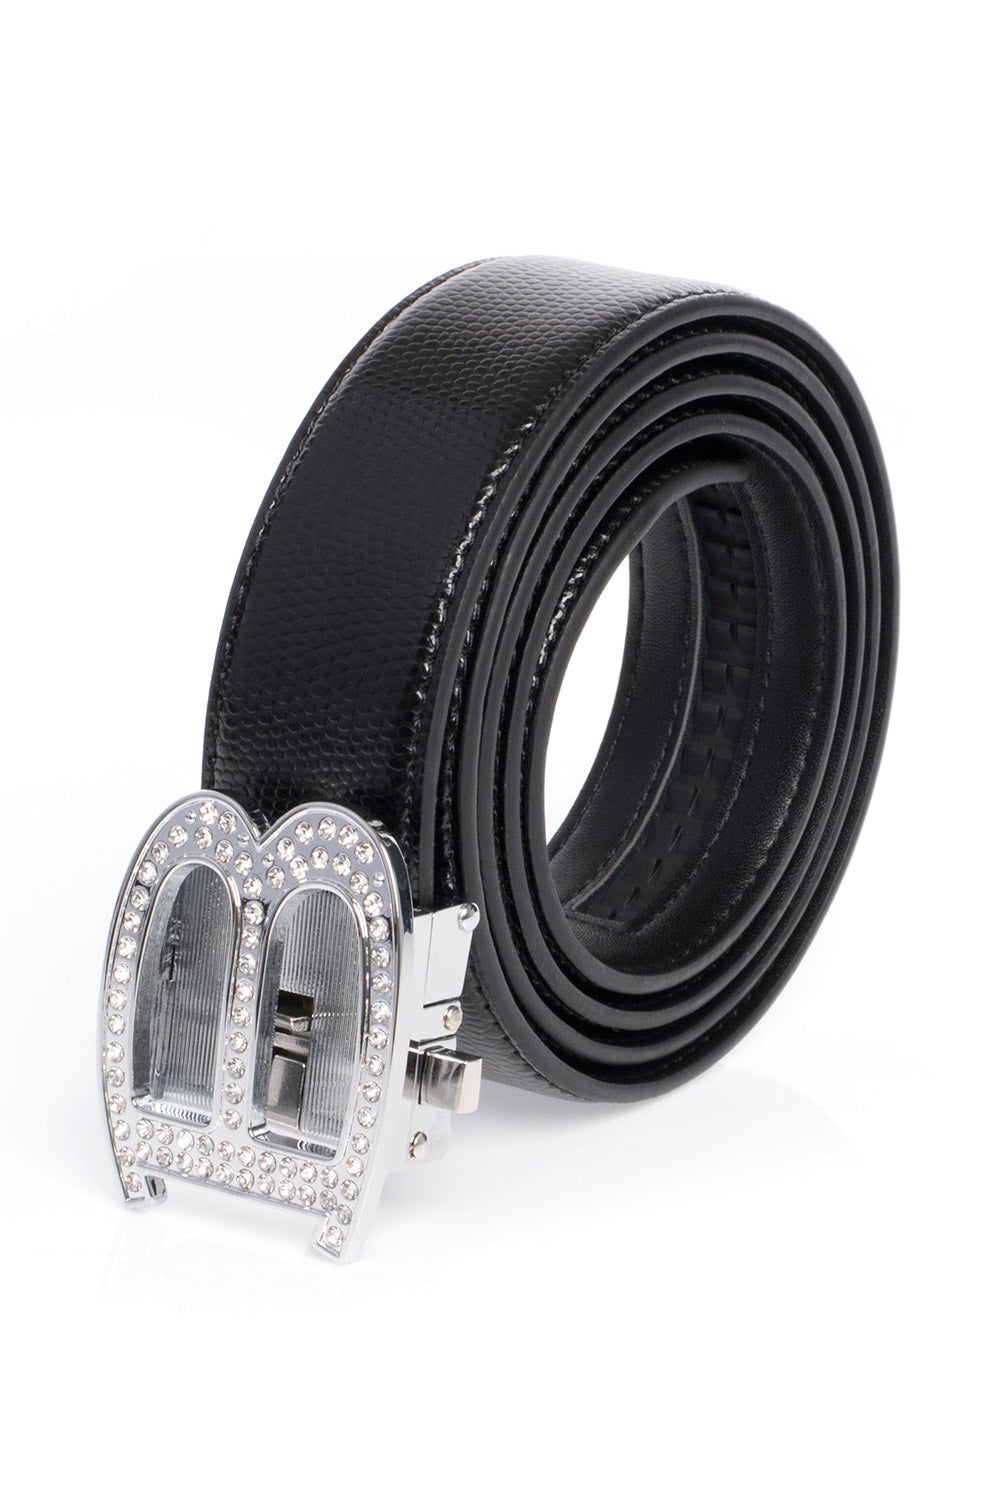 Barabas "B" Shiny Black/Black Snake Adjustable Luxury Leather Dress Belt - Dudes Boutique